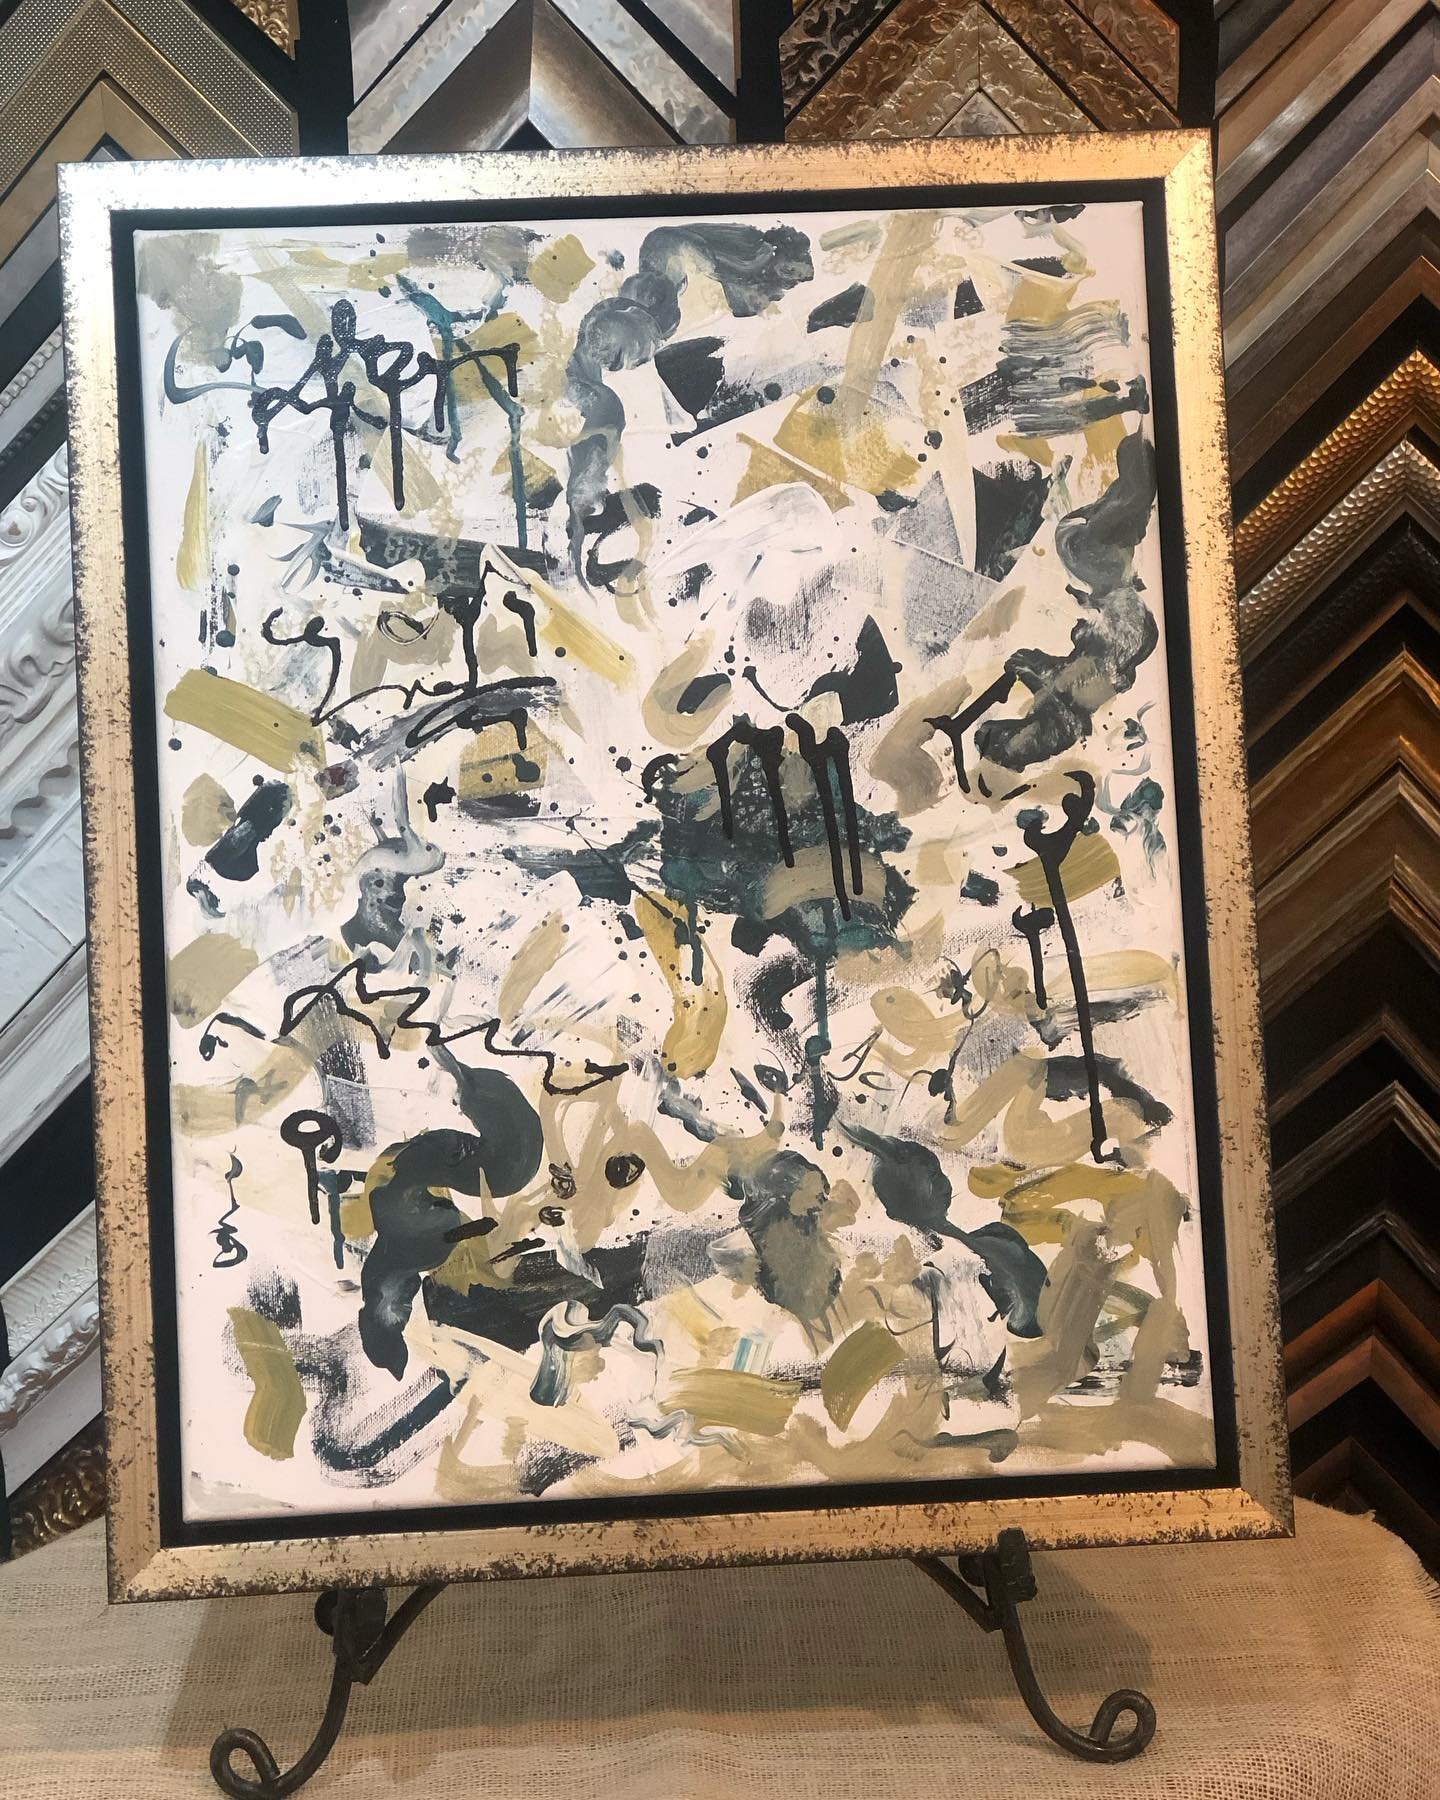 &ldquo;Abstract&rdquo;. Acrylic on canvas. 
18&rdquo;x22&rdquo;  Available for purchase.
 

#frameshop #originalart #fineart #bedfordvillageny #artgallery #amciregence @bedfordvillagebuzz